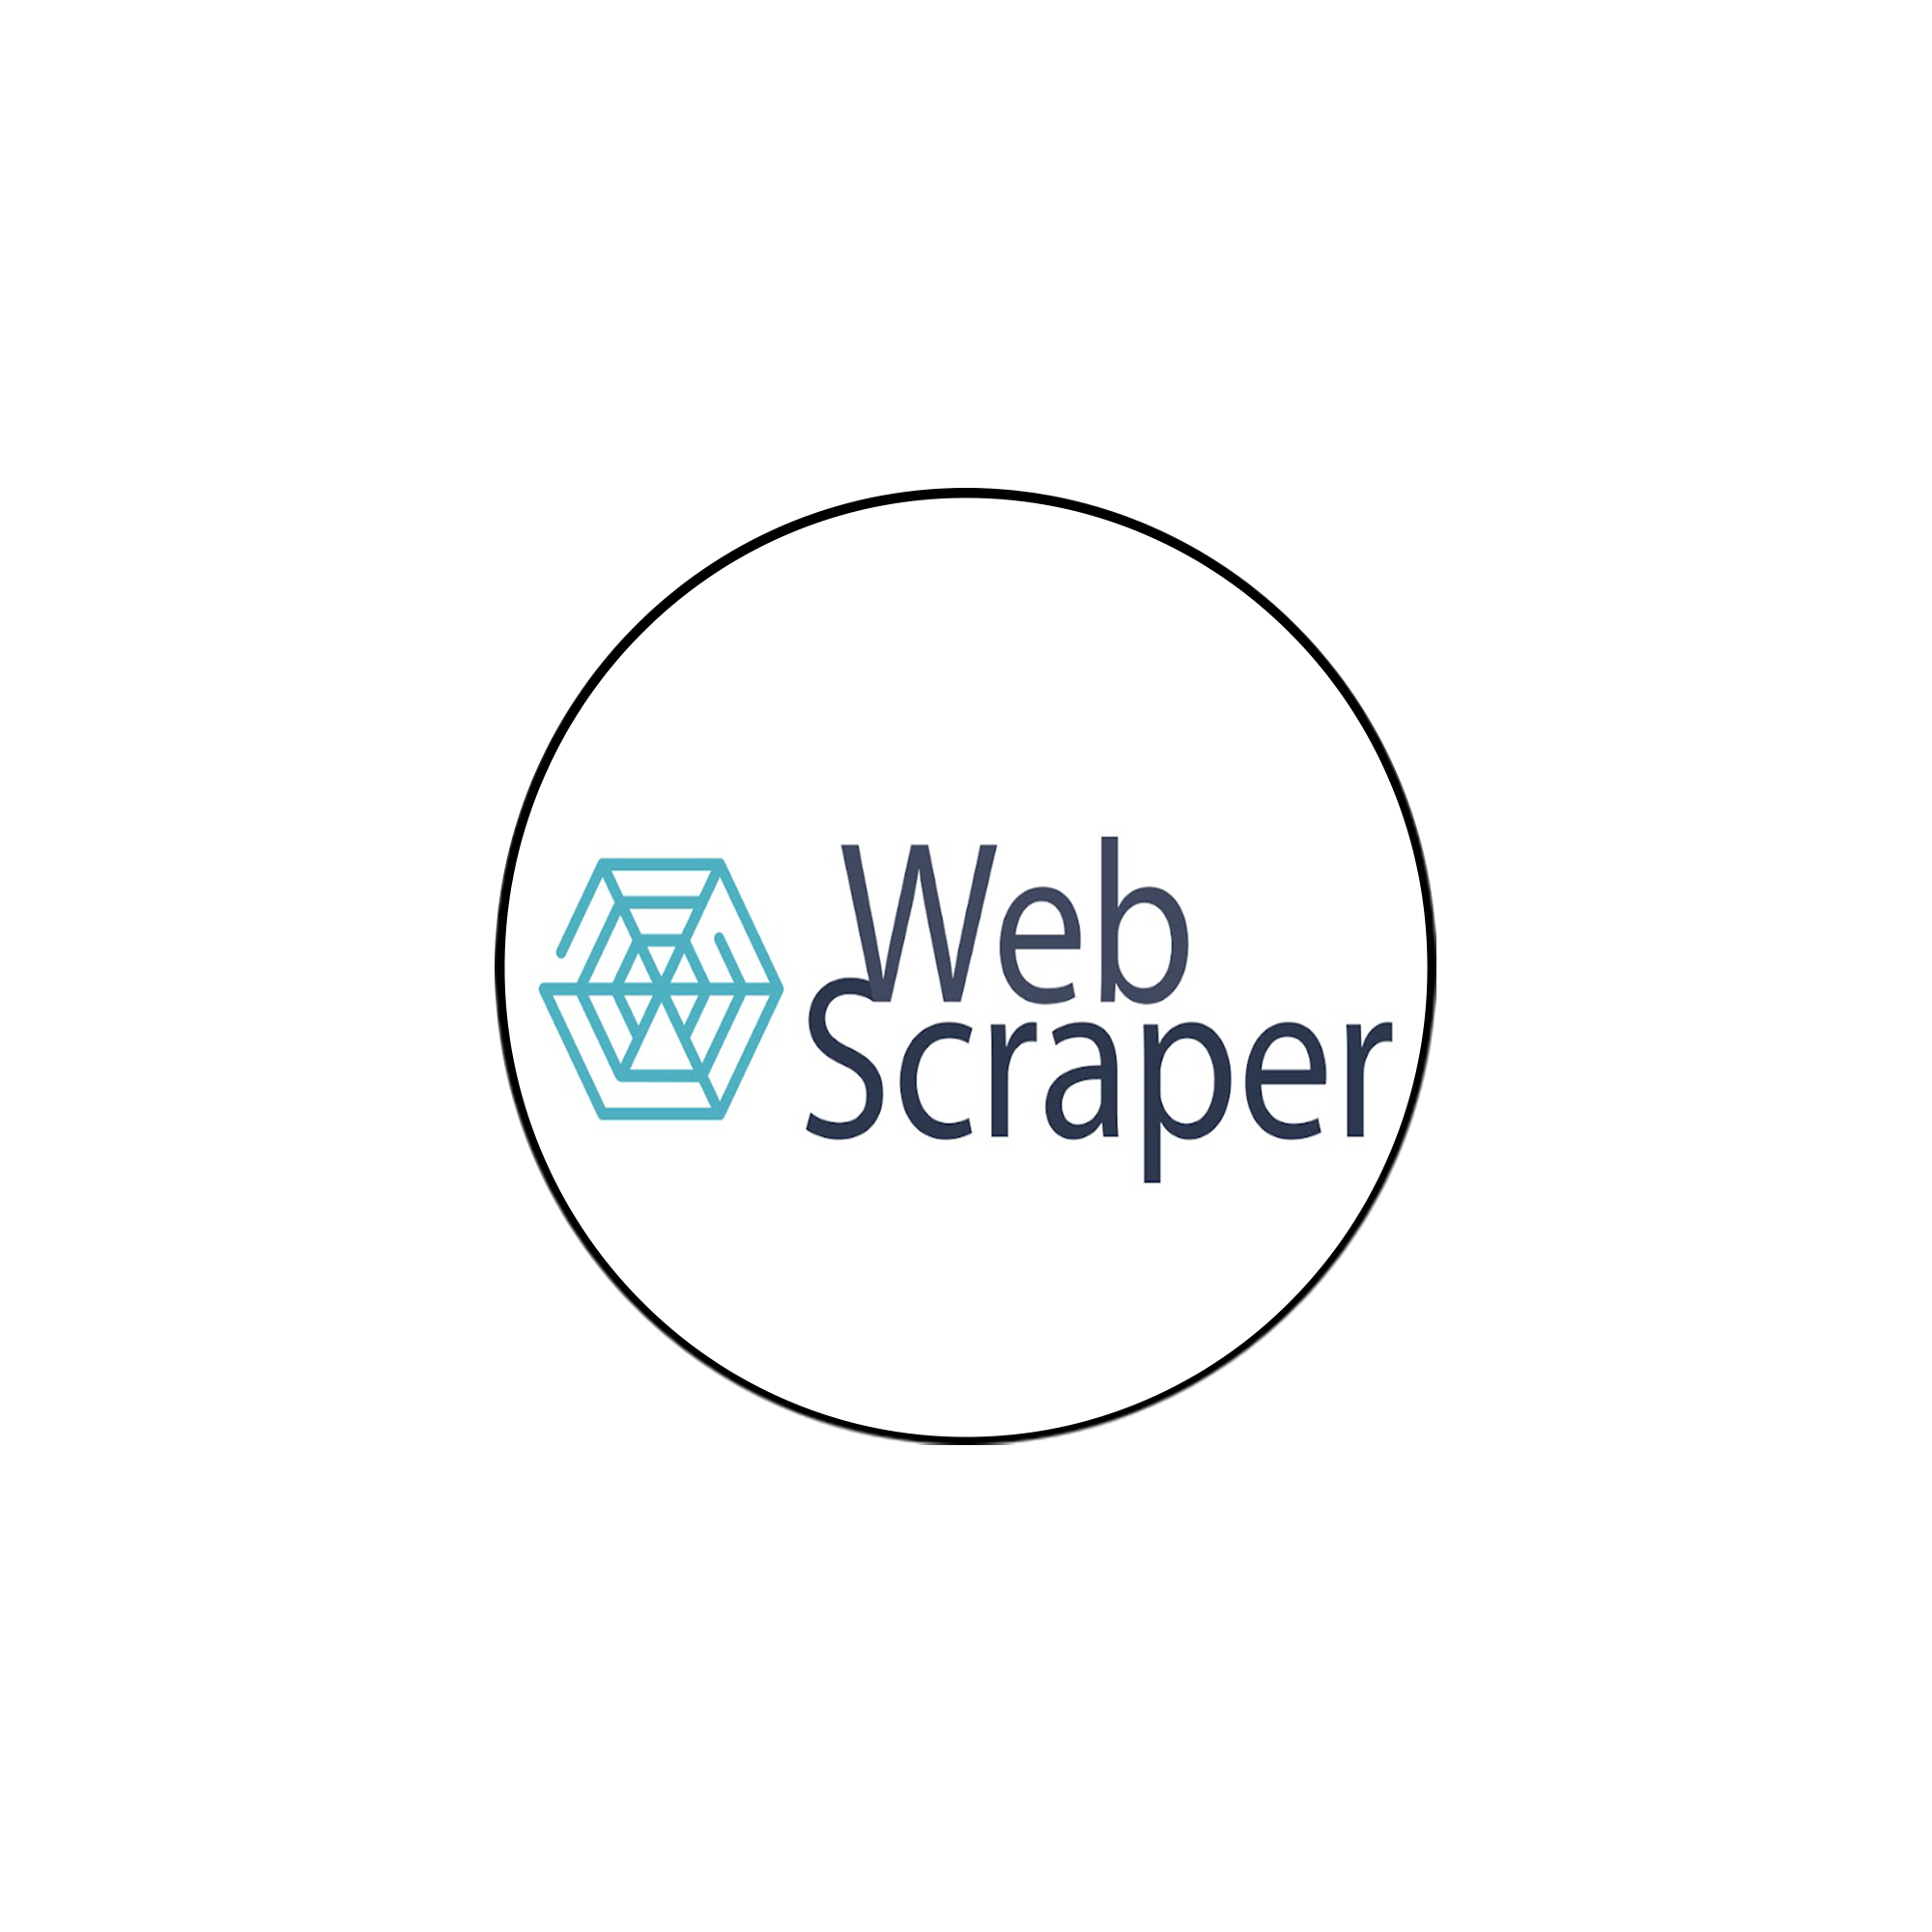 Web scraper growth hacking tool